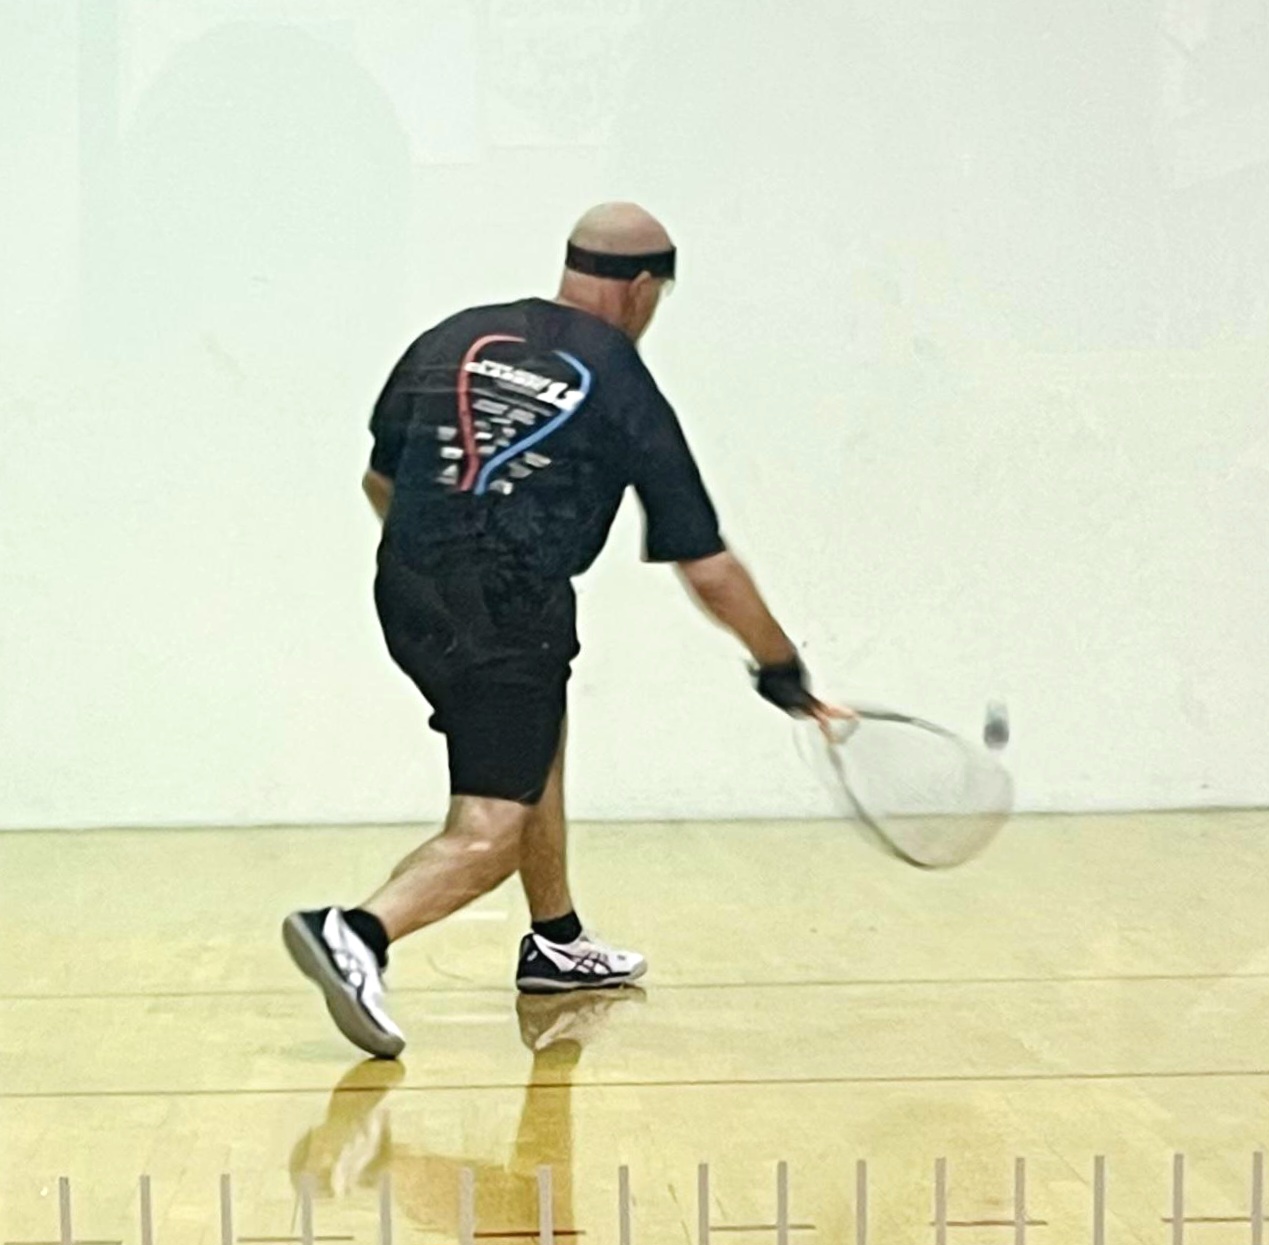 Dan Ocala Racquetball